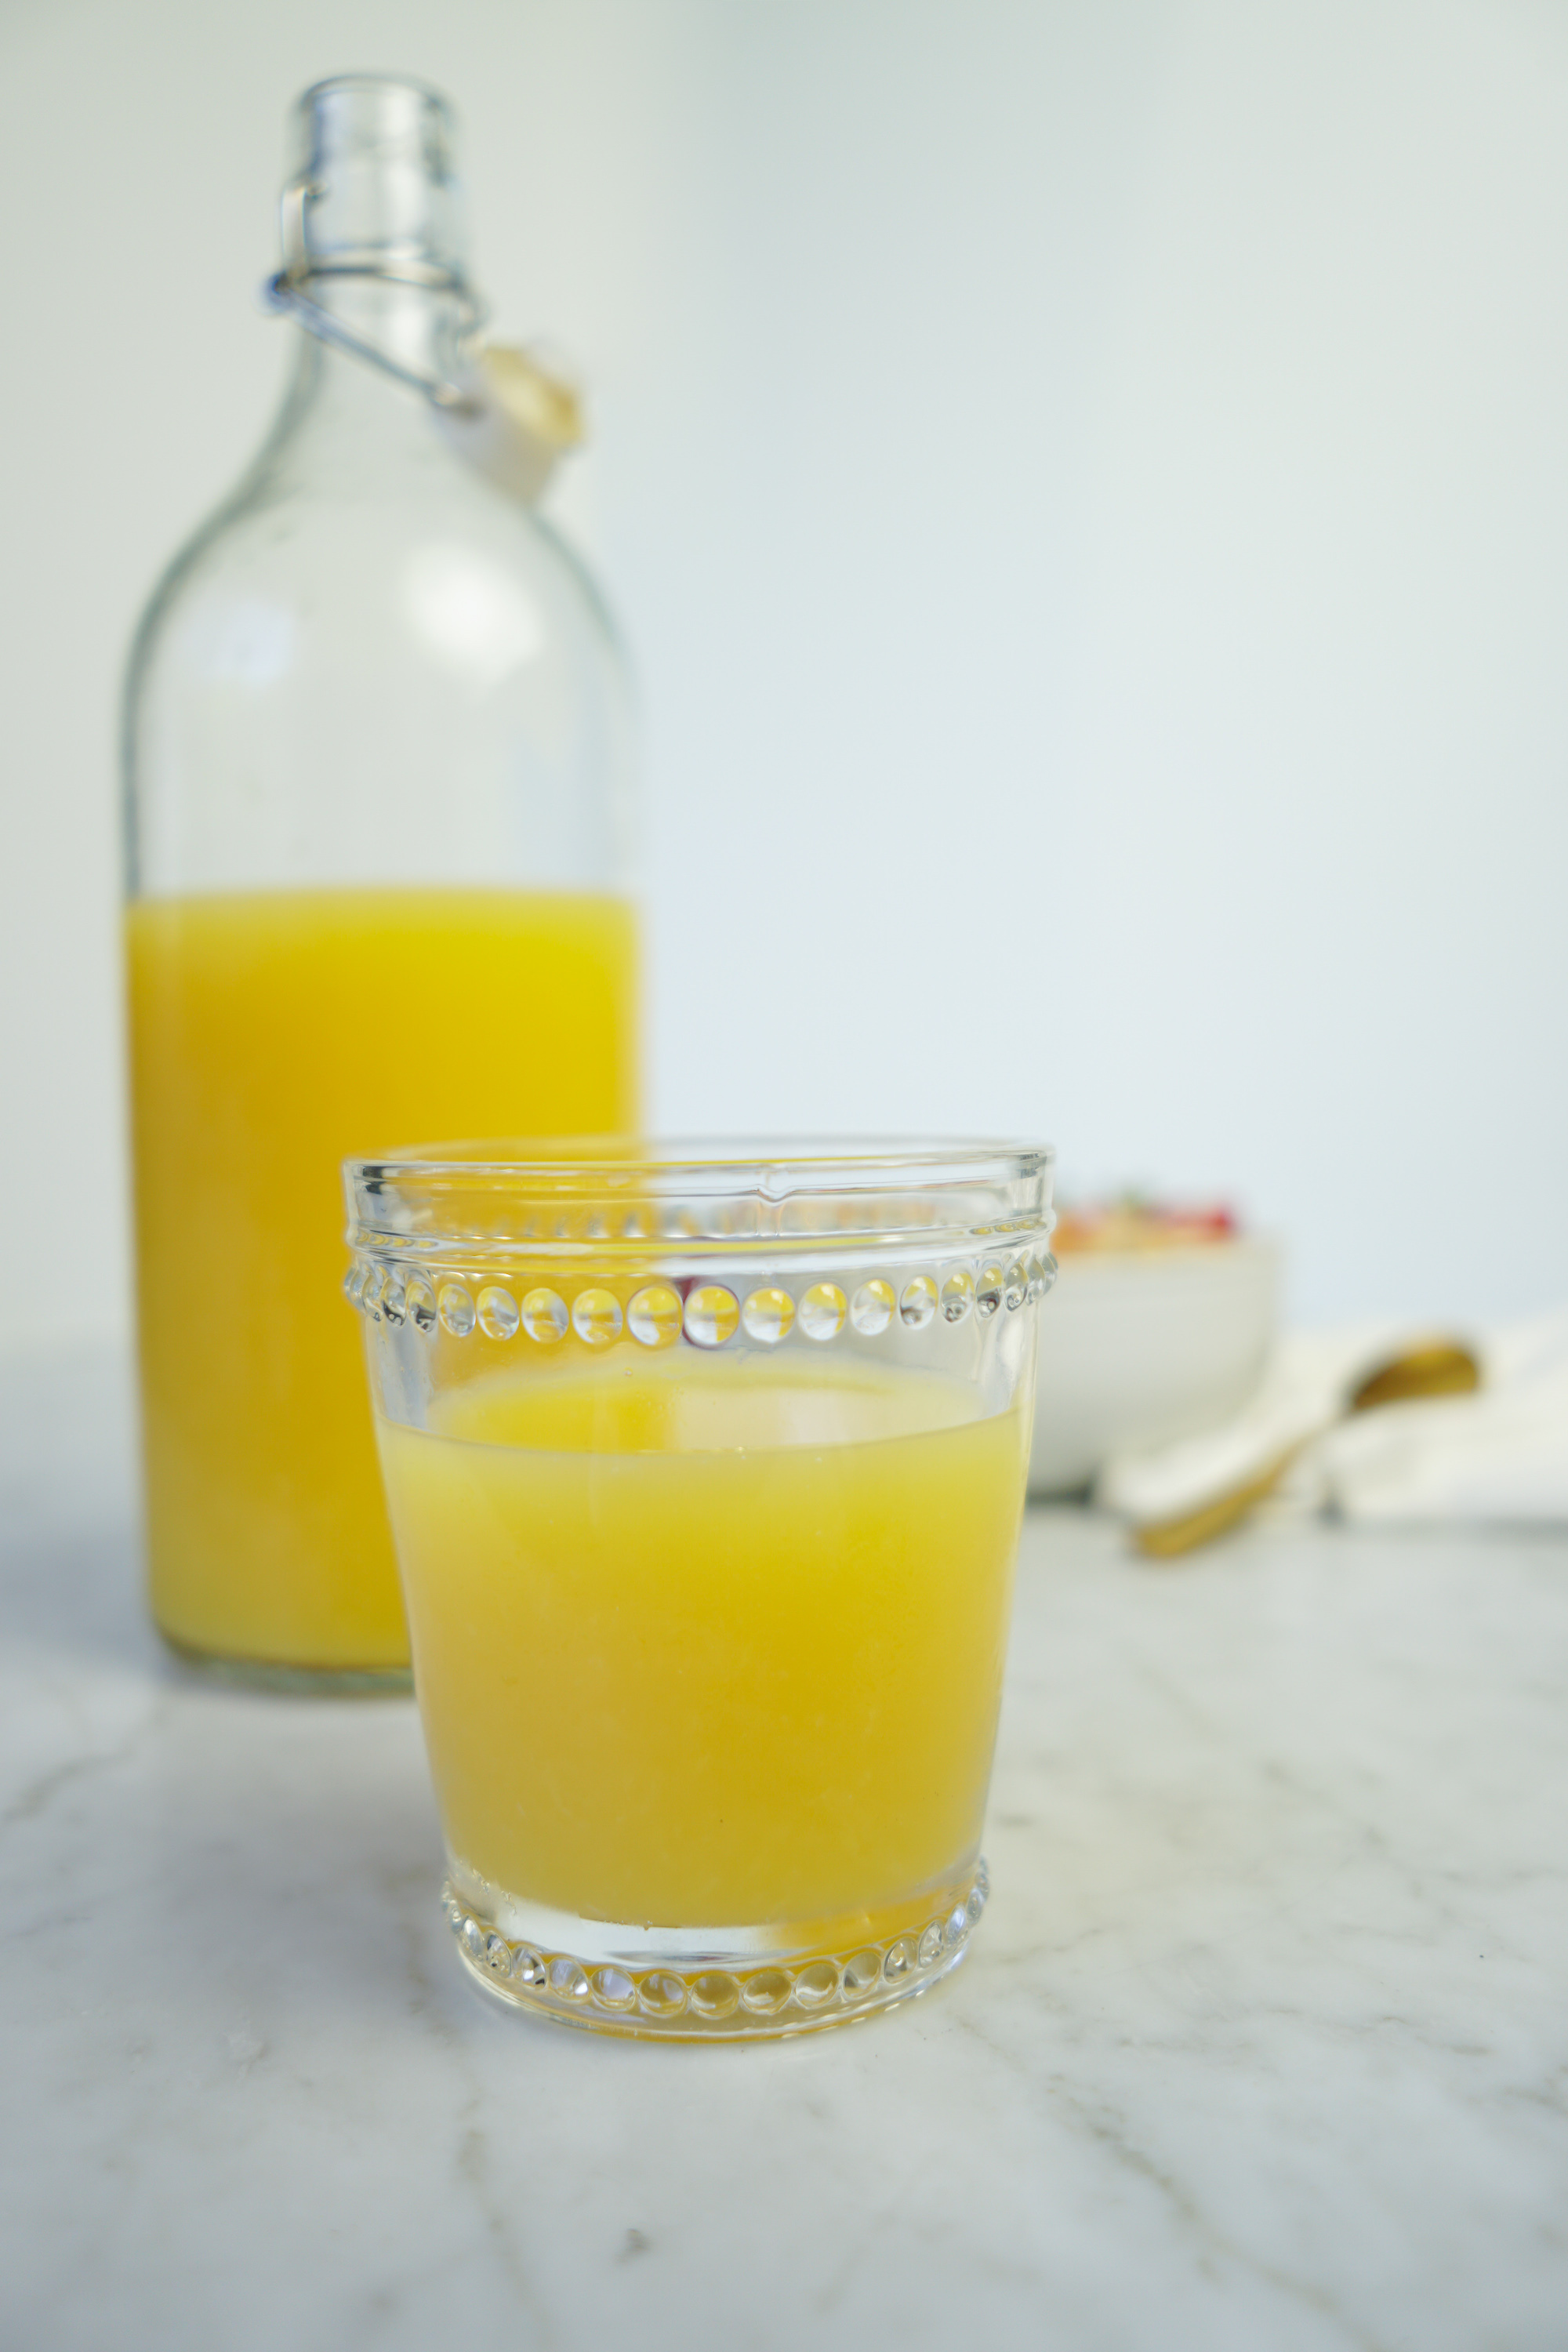 orange juice recommendations for kids